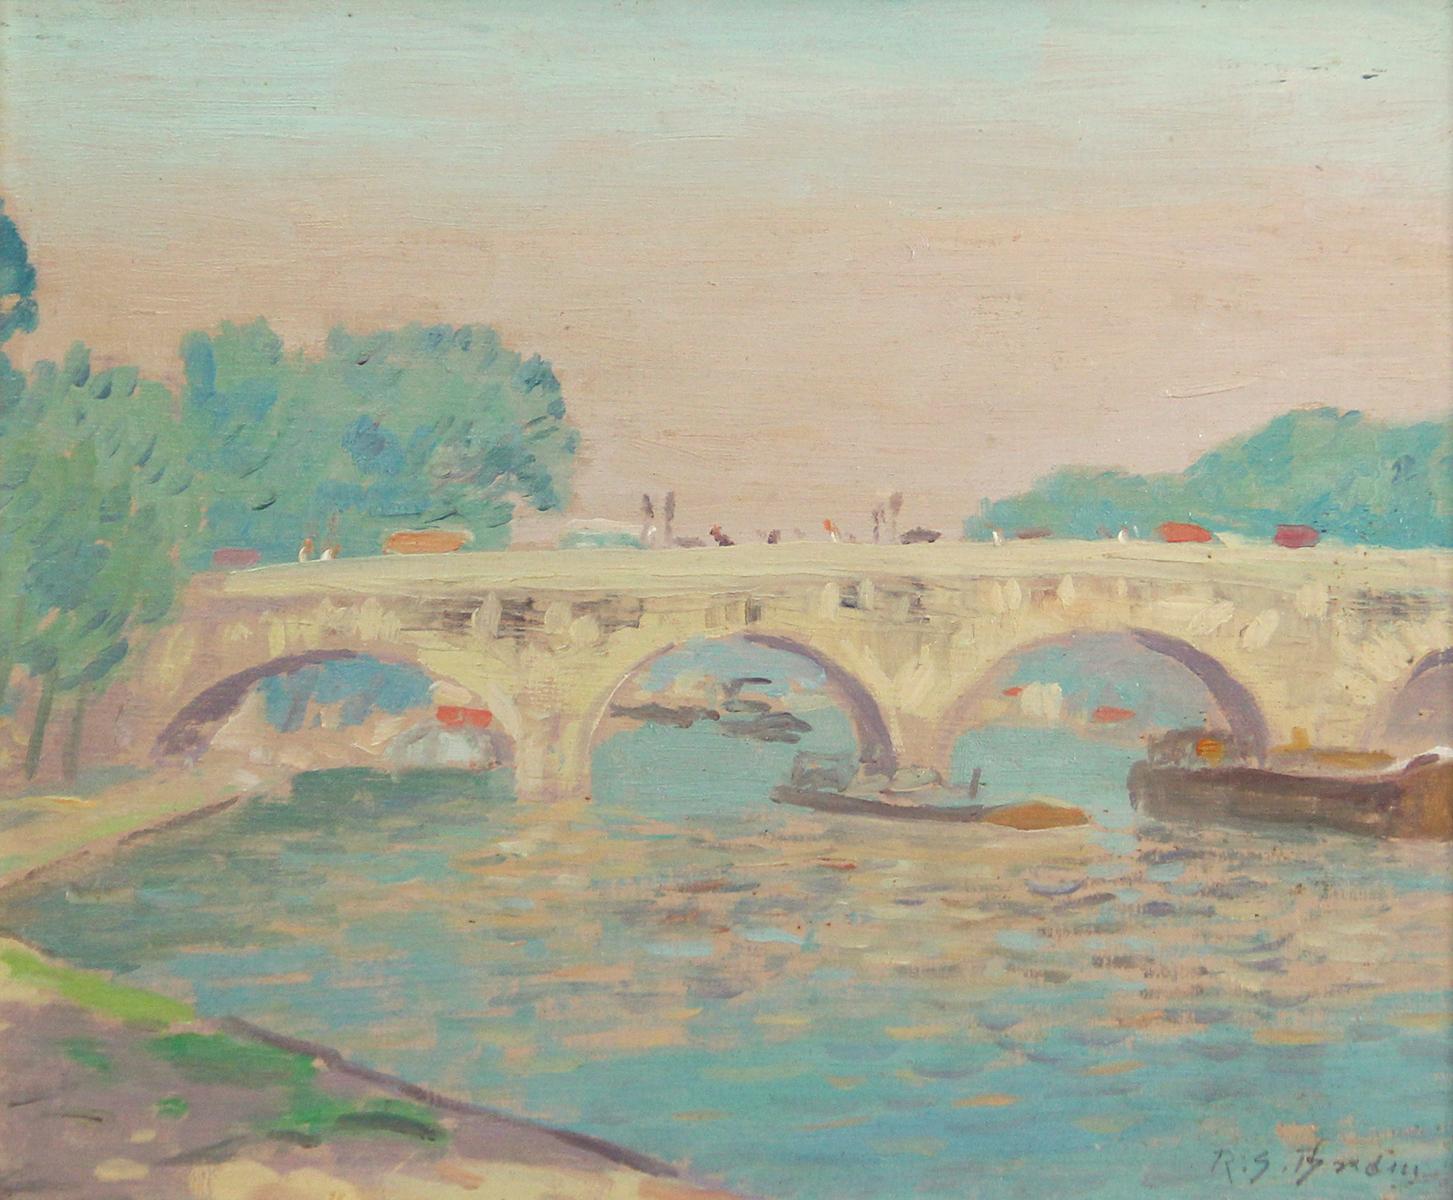 Bridge Scene in France, American Impressionist, European River Landscape, 1914 - Painting by Rae Sloan Bredin